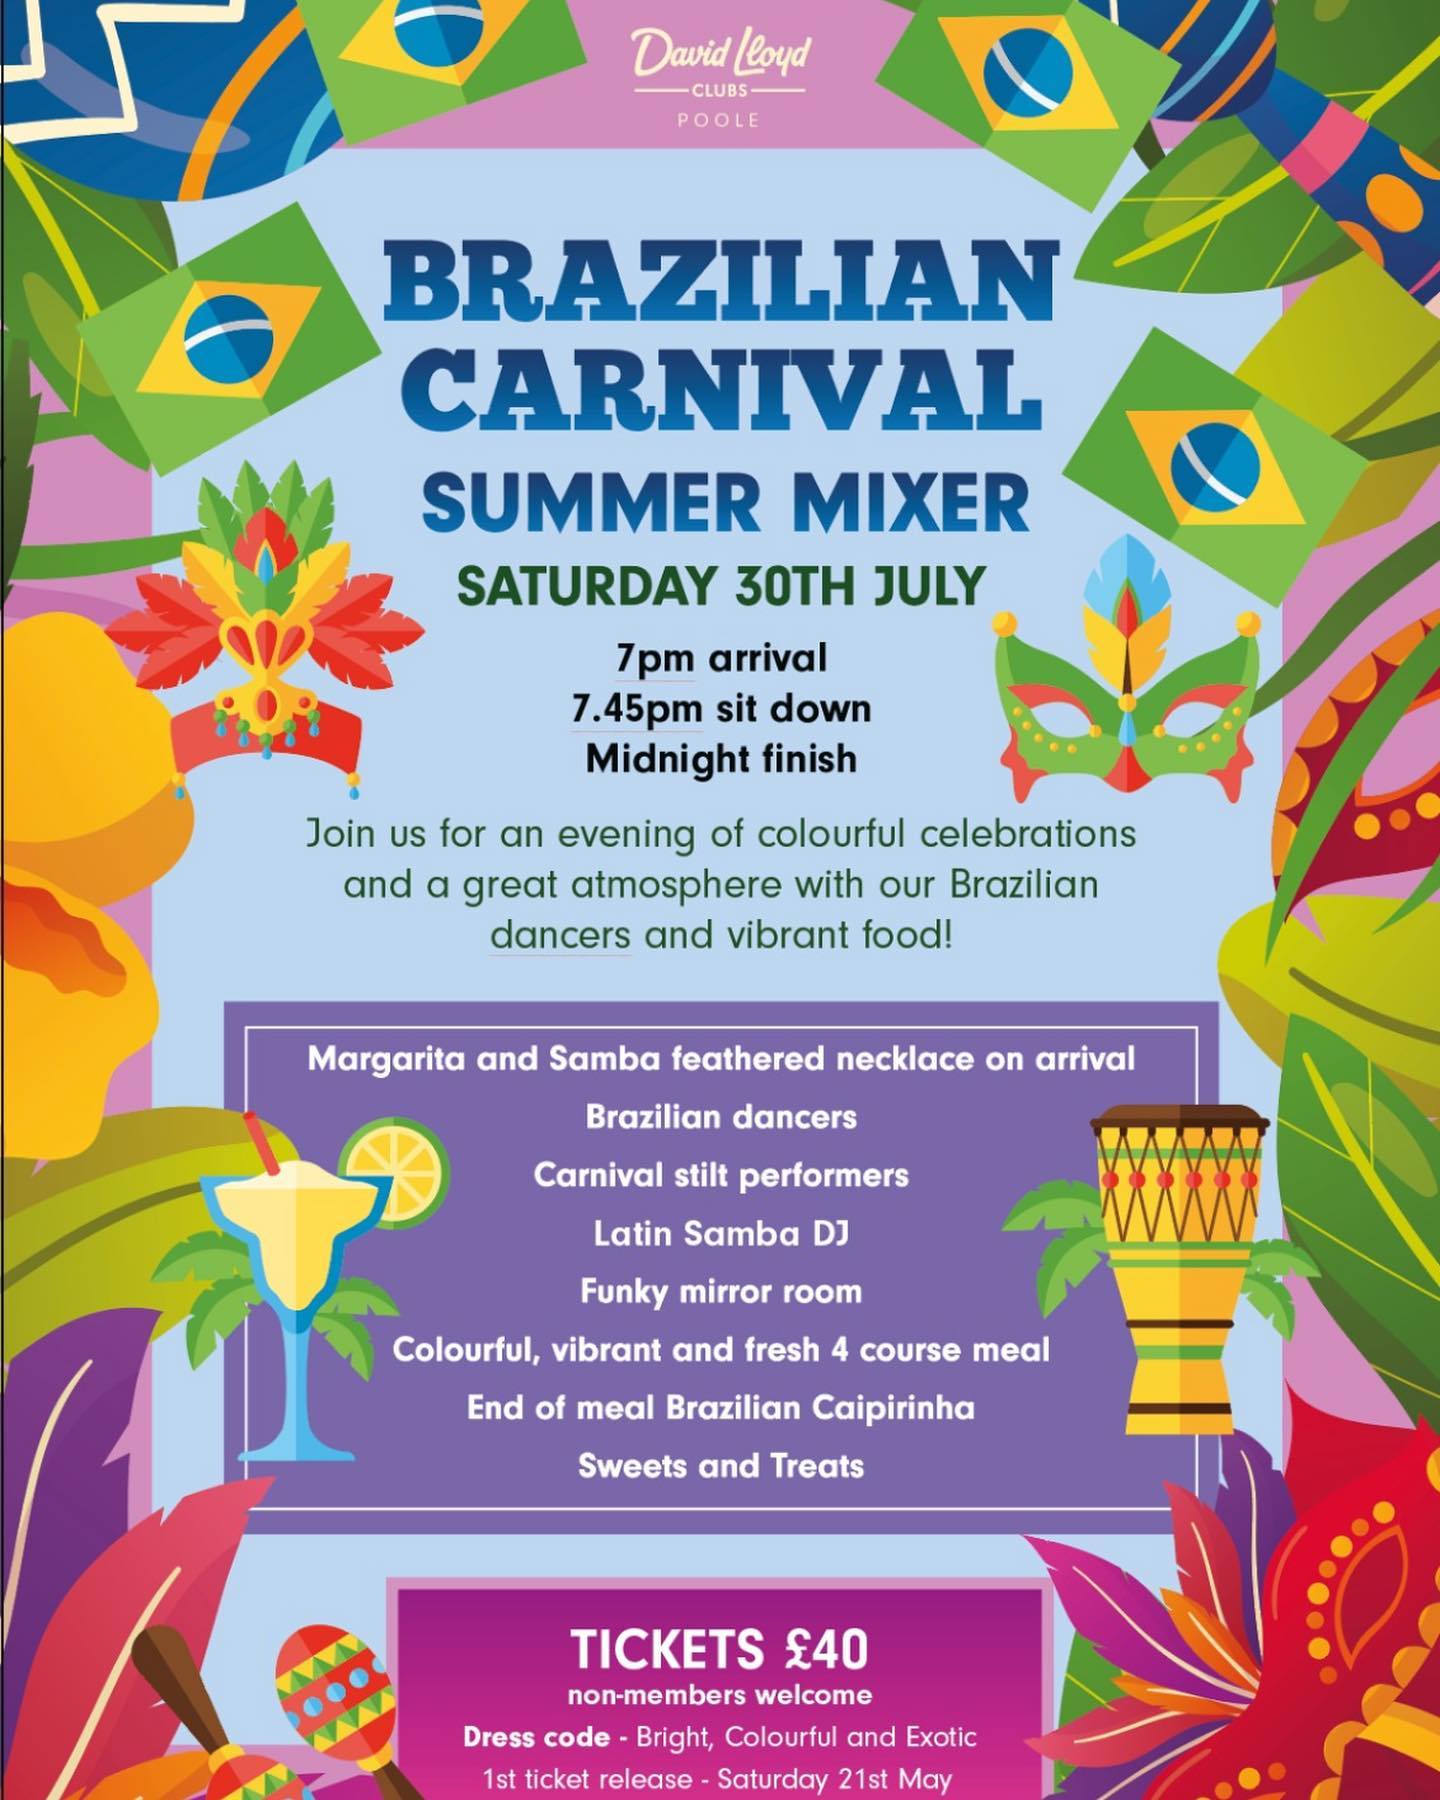 Brazilian Carnival Summer Mixer at David Lloyd